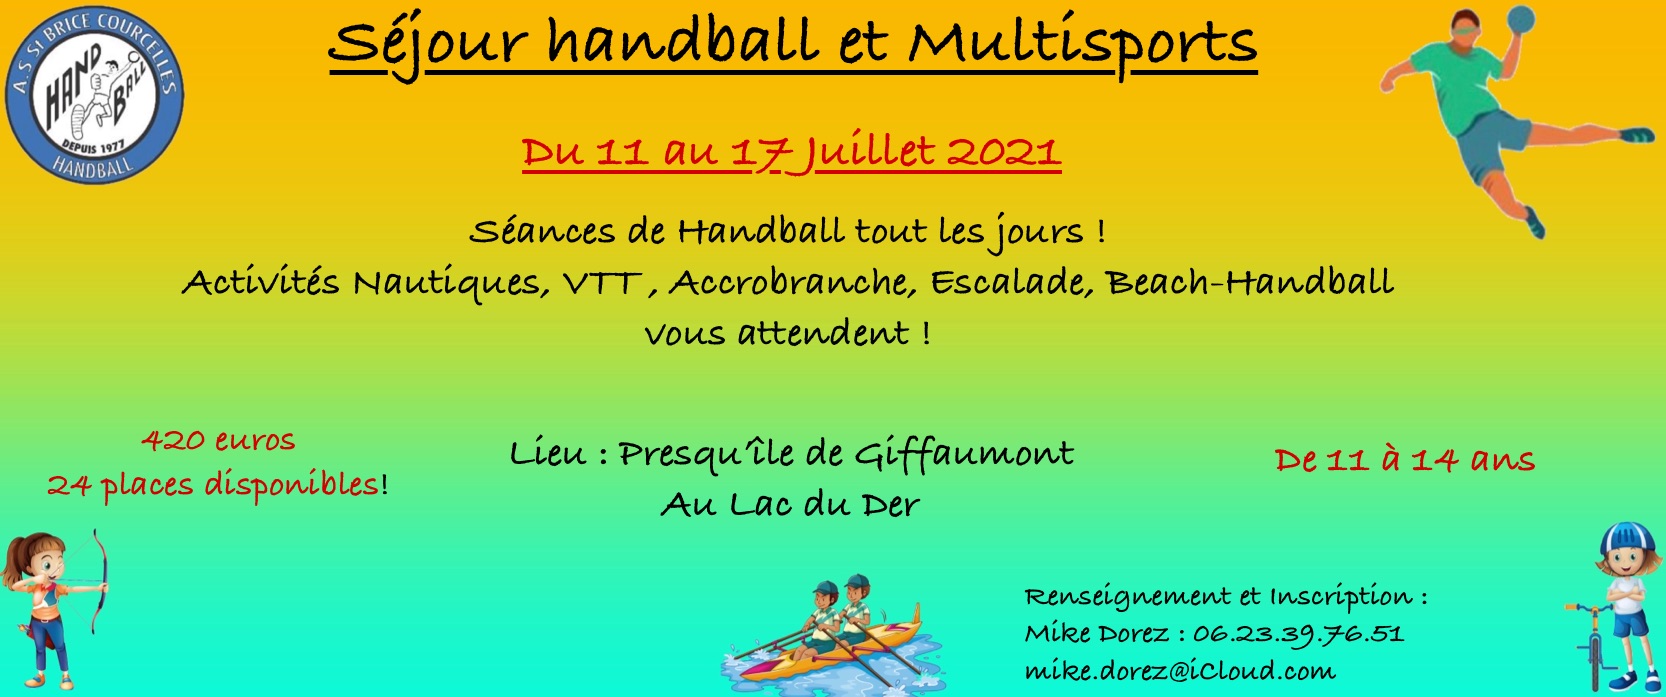 Séjour Handball et Multisports en juillet !